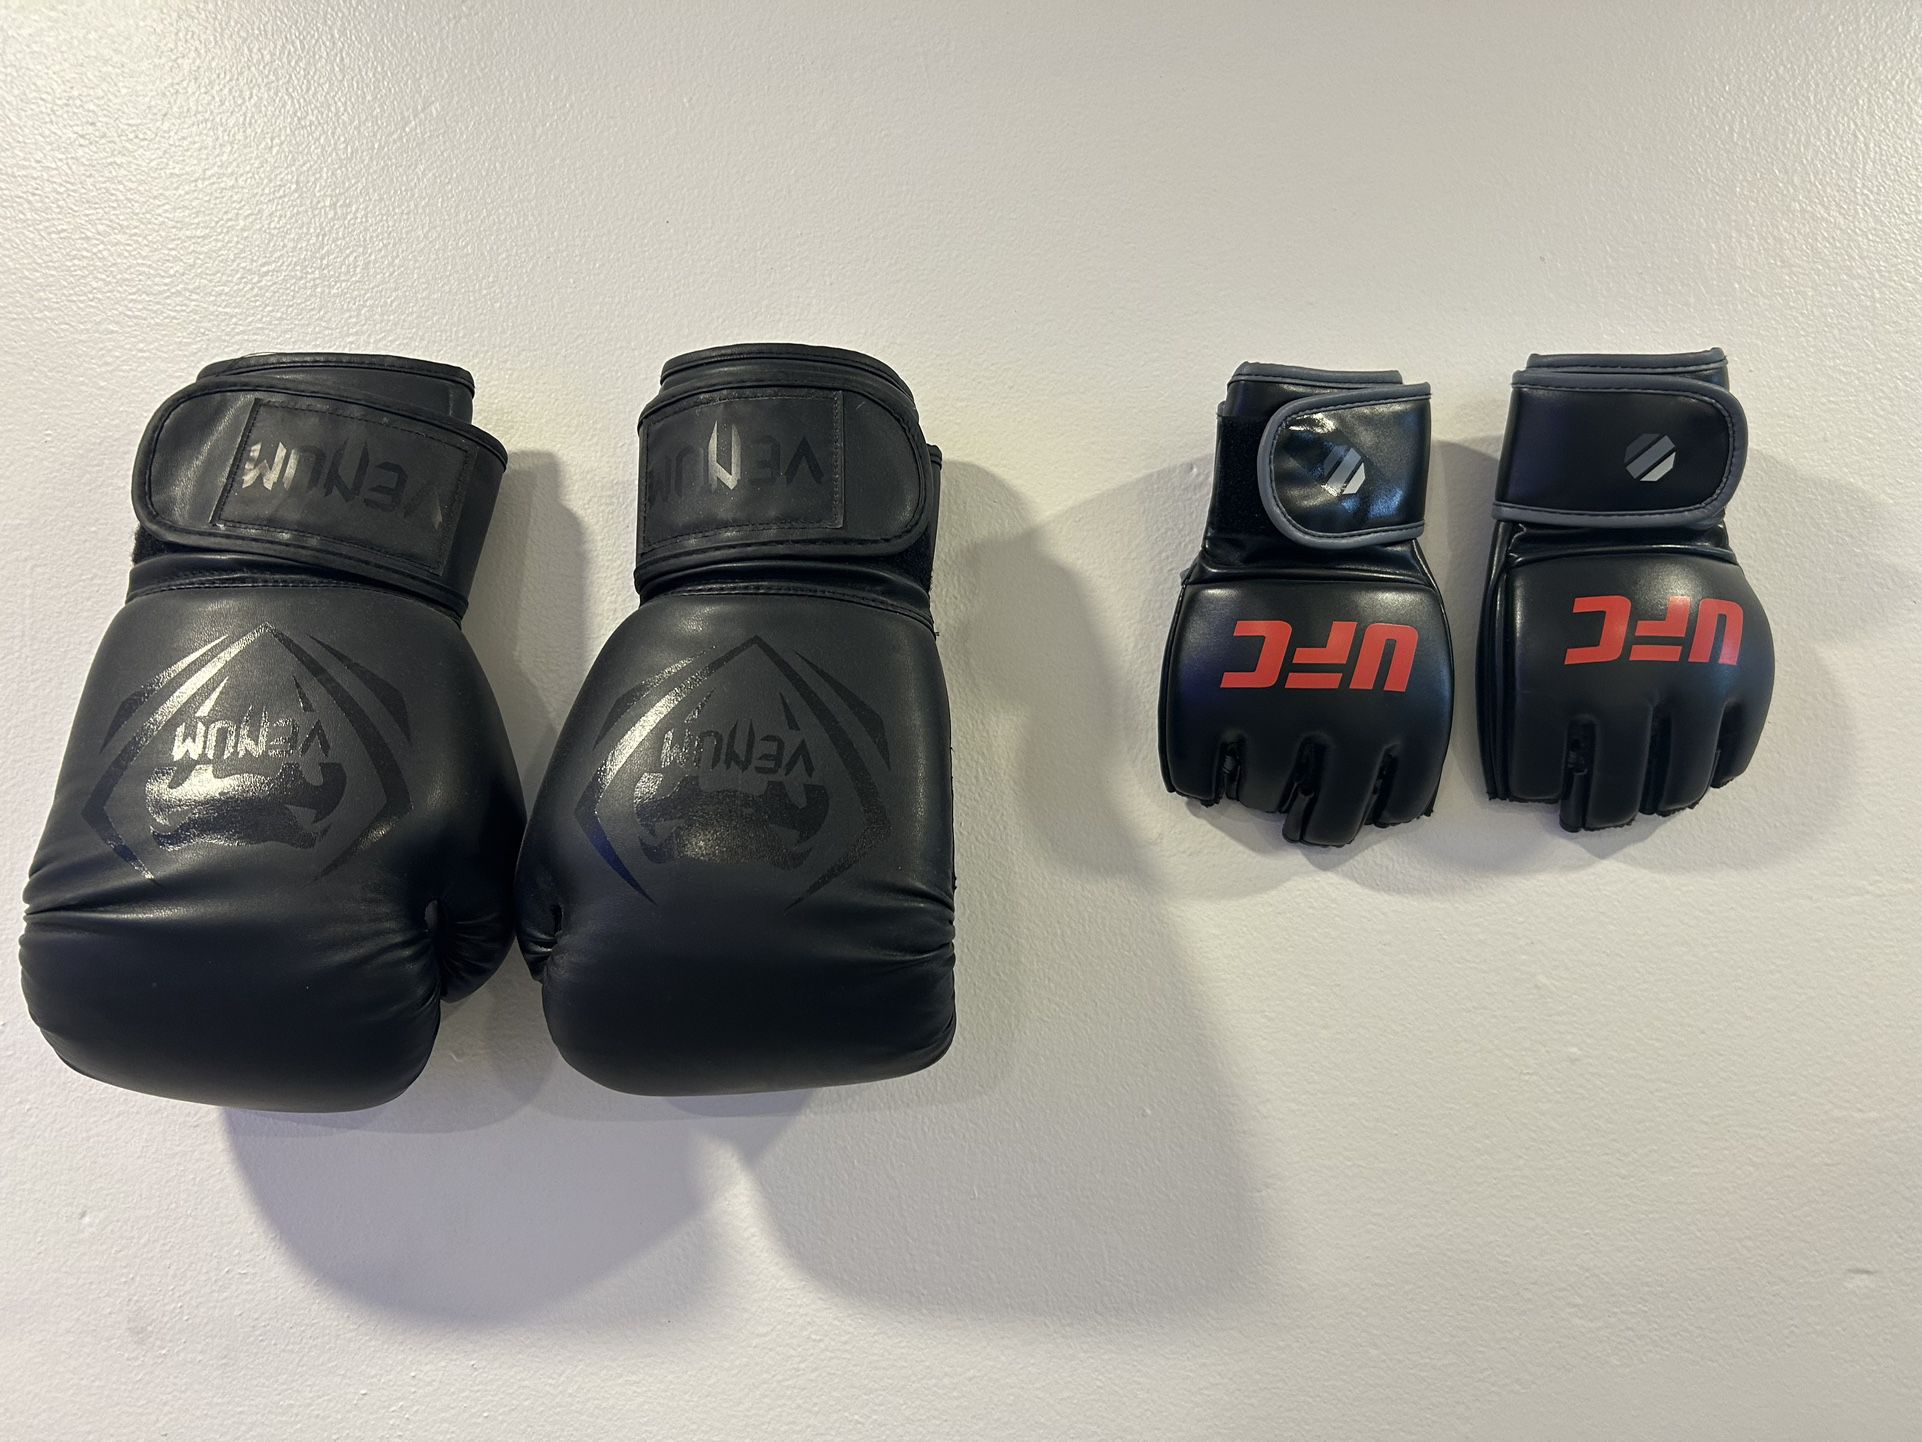 Boxing Gloves / UFC Gloves